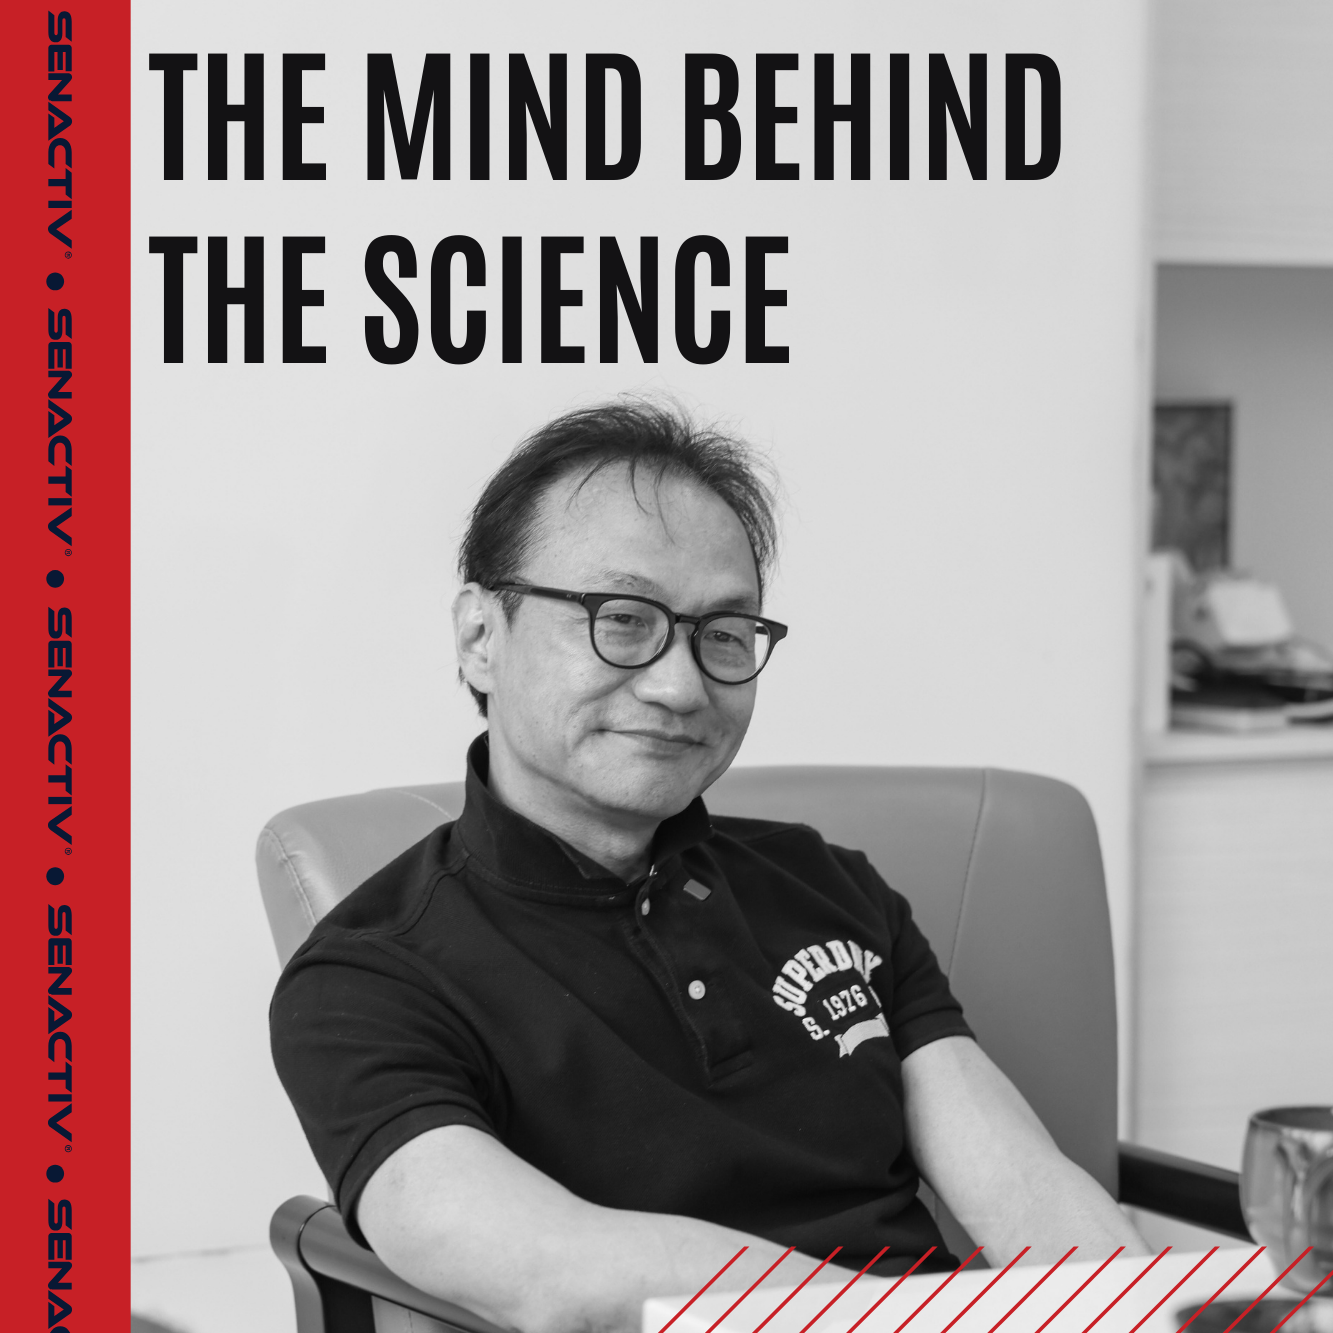 Meet the mind behind Senactiv, Dr. Kuo